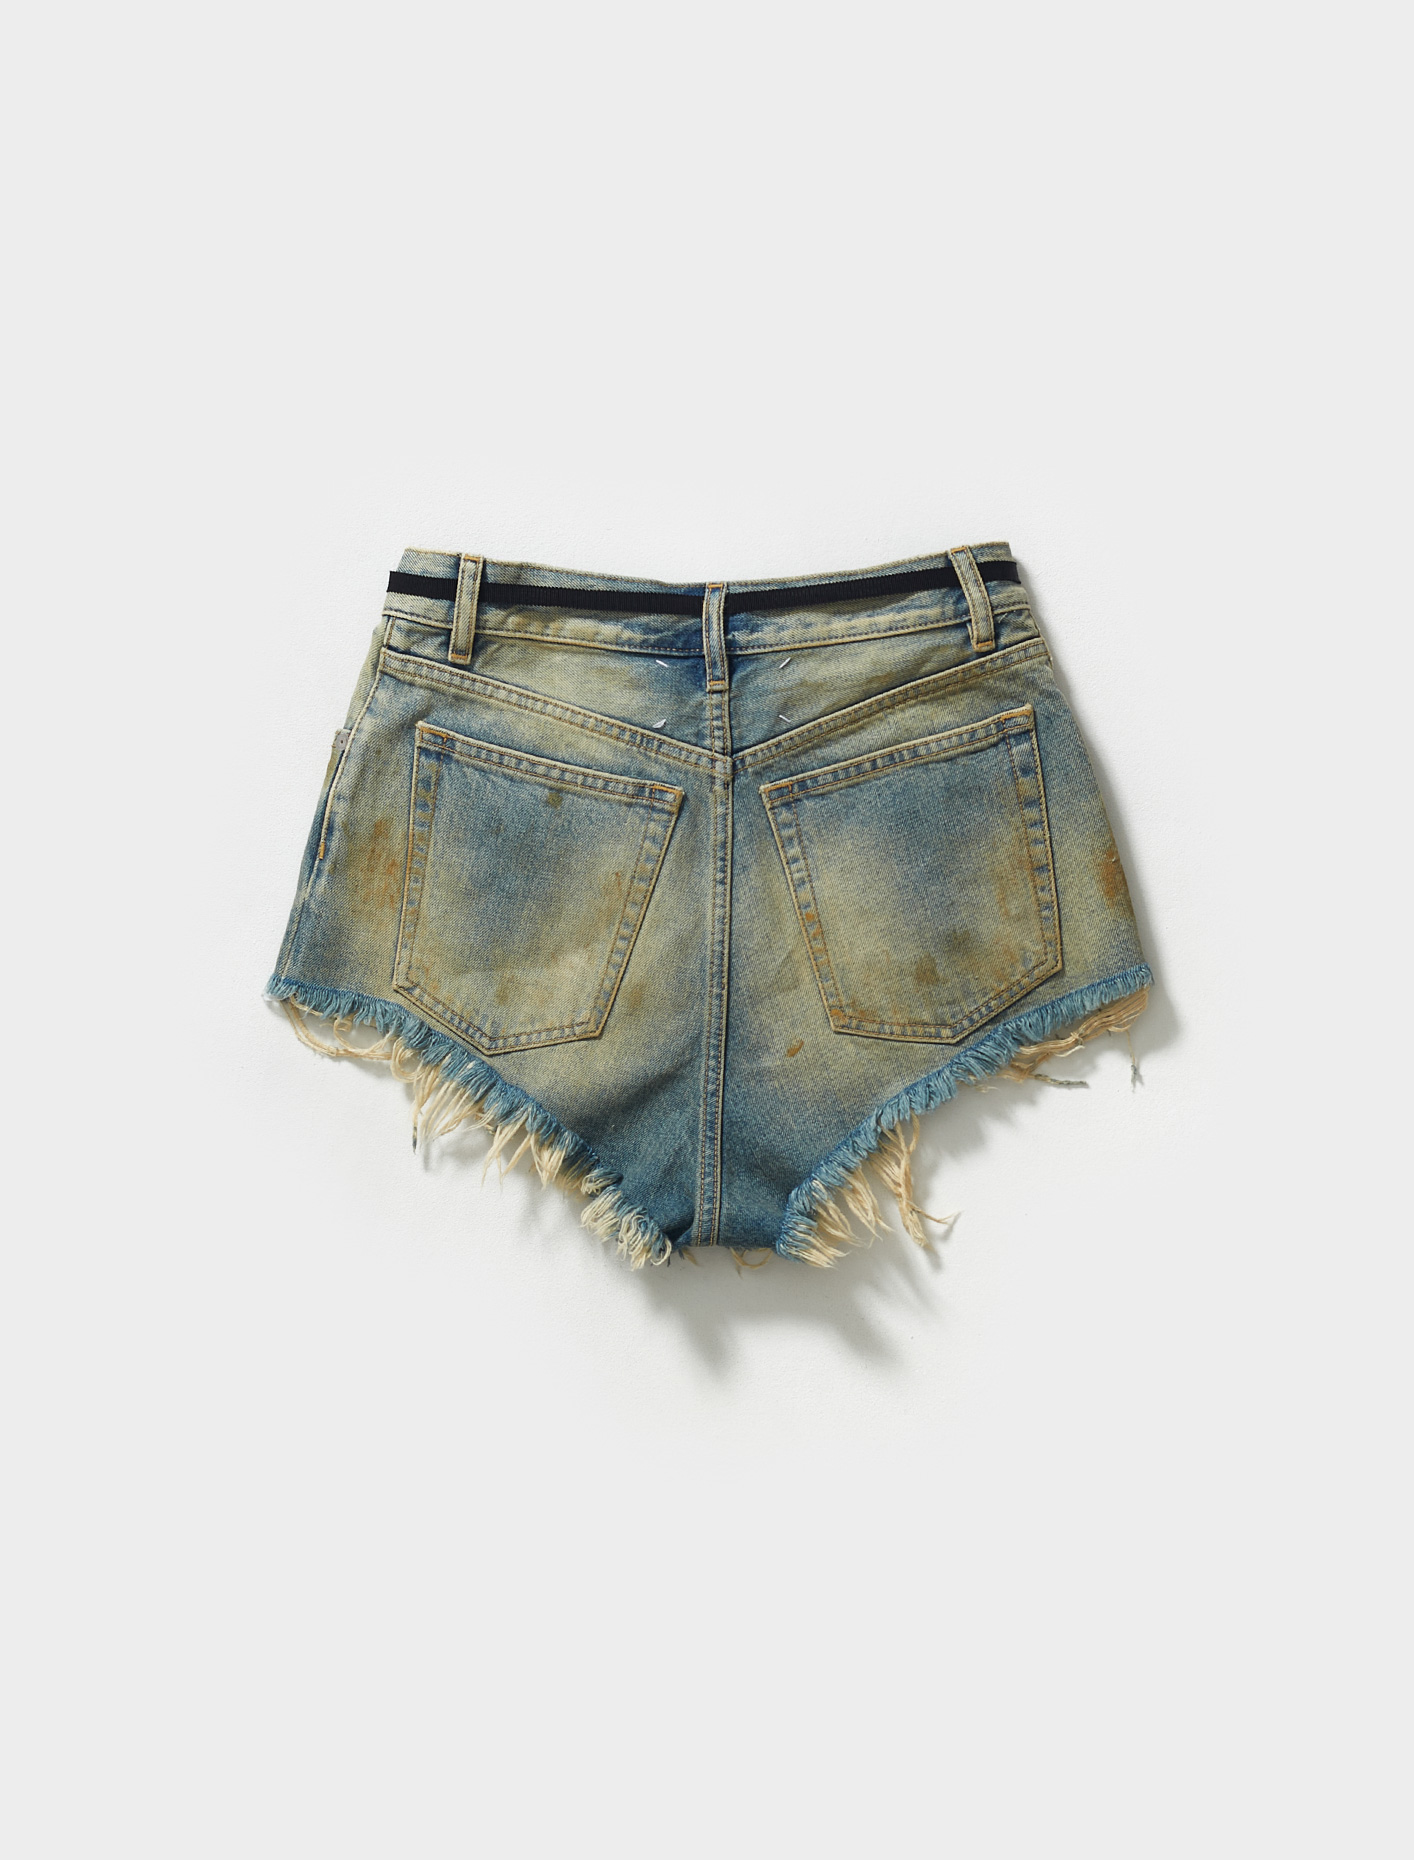 Maison Margiela Distressed Jean Shorts in Dirty Denim